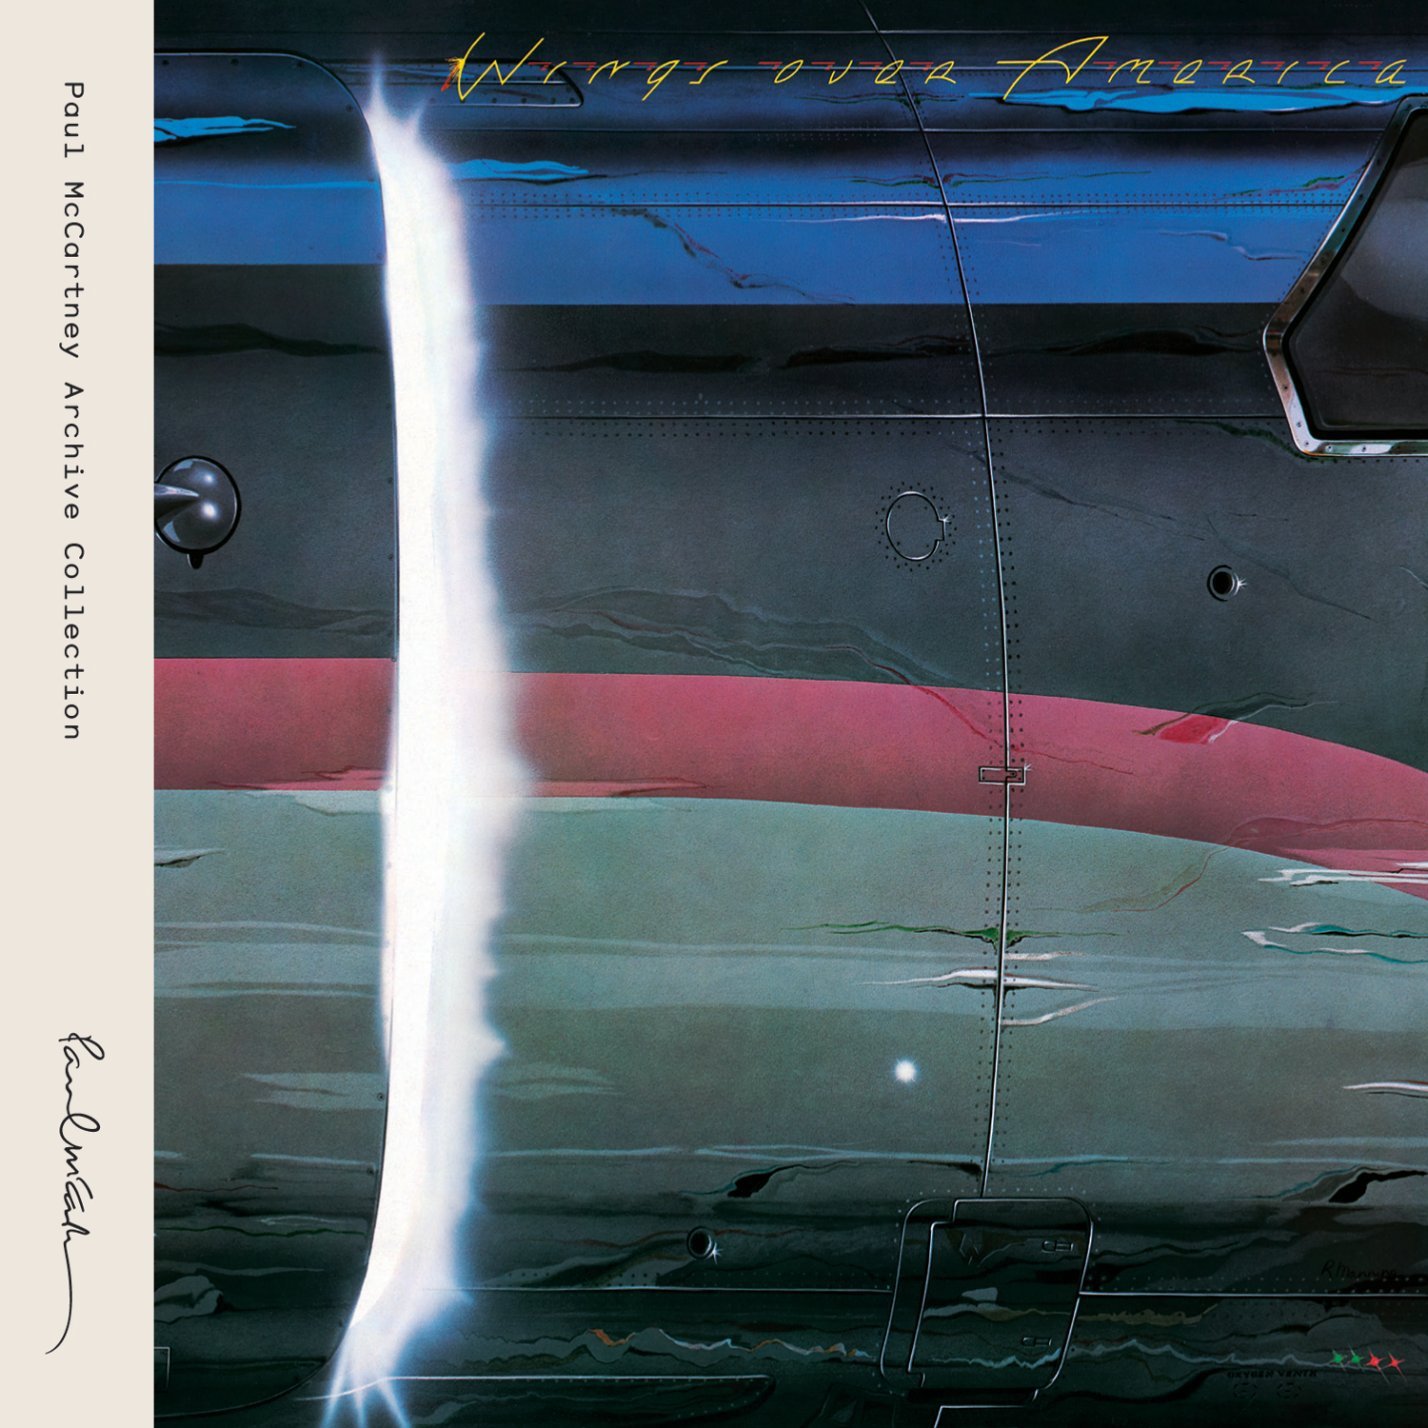 Paul Mccartney & Wings – Wings Over America (Remastered) (2013/2019) [FLAC 24bit/44,1kHz]